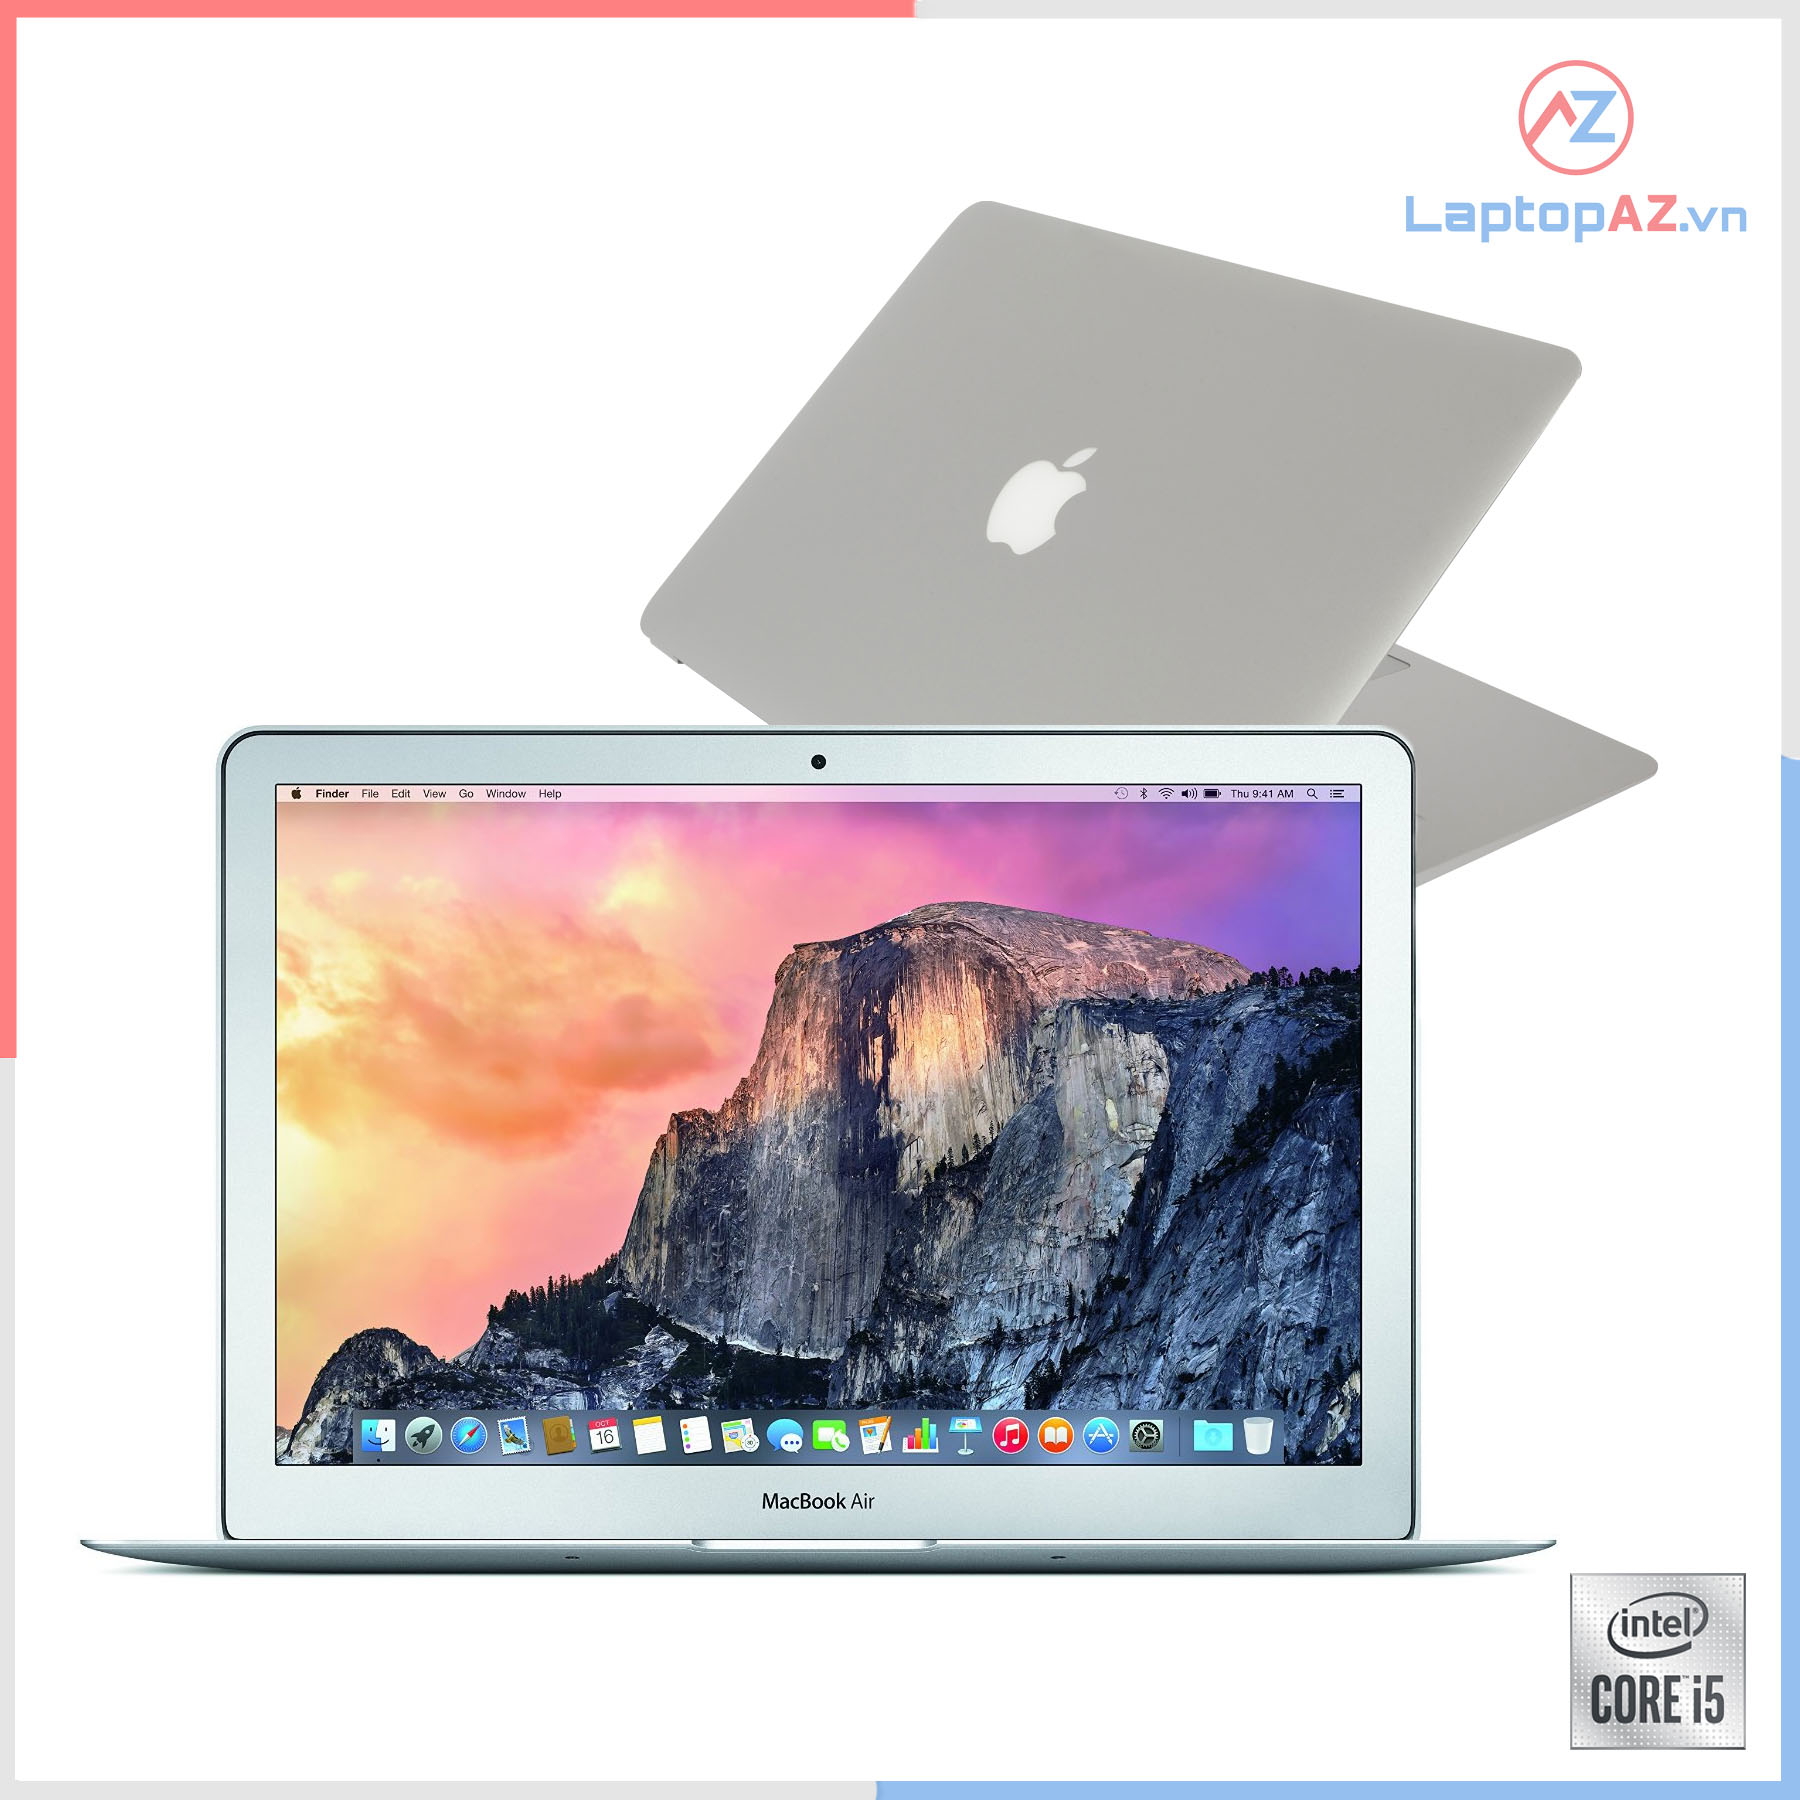  MacBook Air 13 inch MD760 ( Core i5-4250U 1.3GHz, 4GB, 128GB, VGA Intel HD Graphics 5000, 13.3 inch)